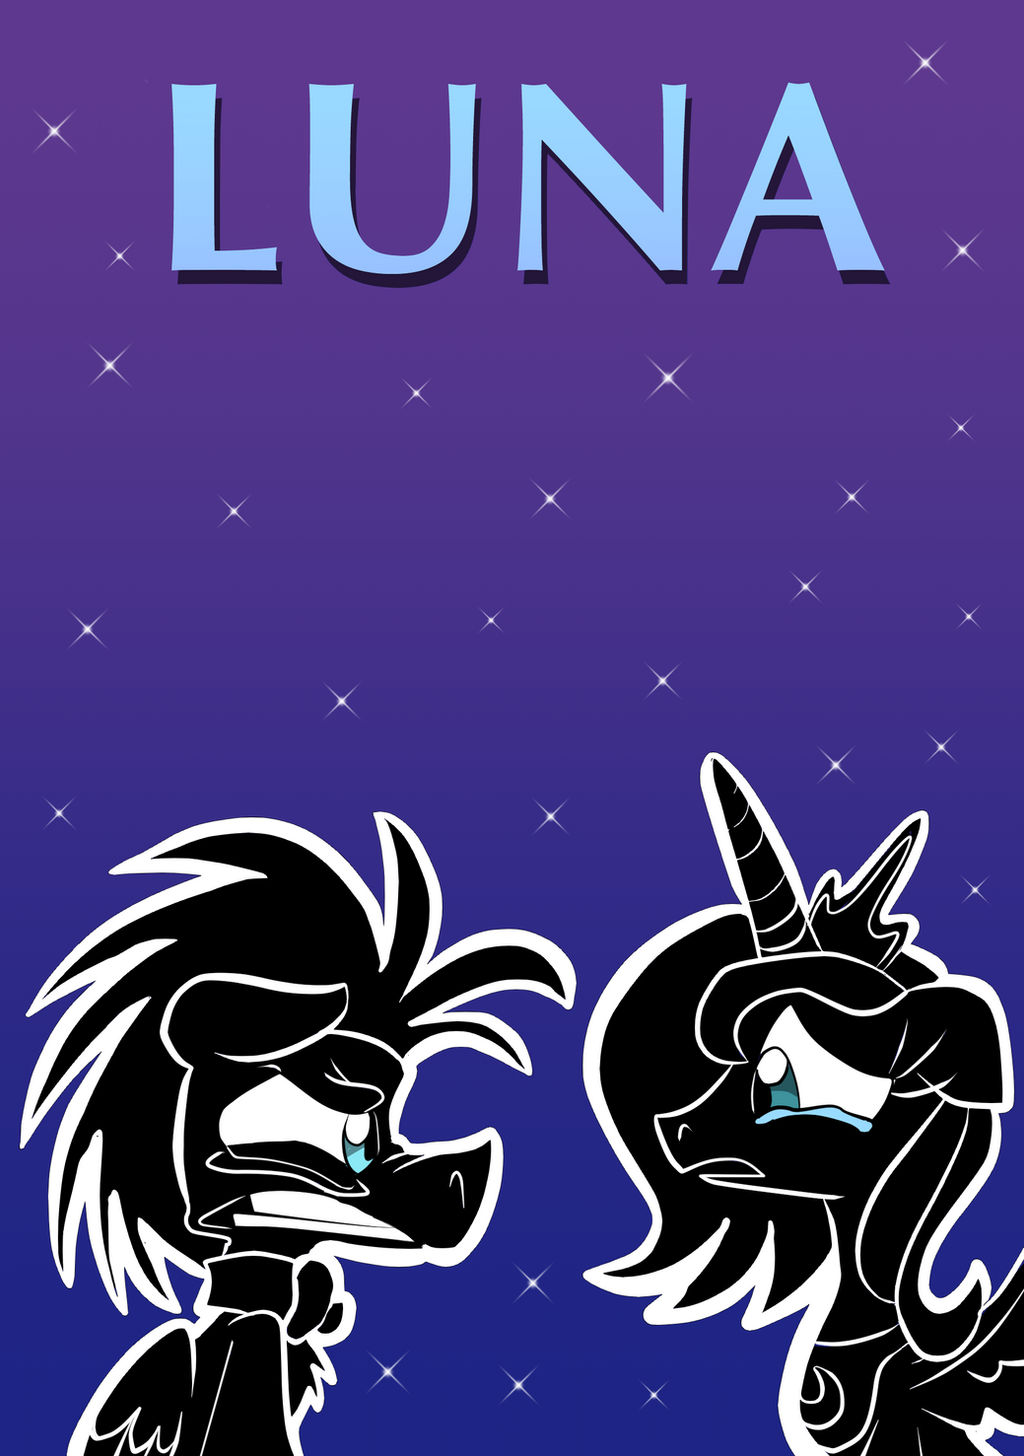 Luna Comic Cover Commission